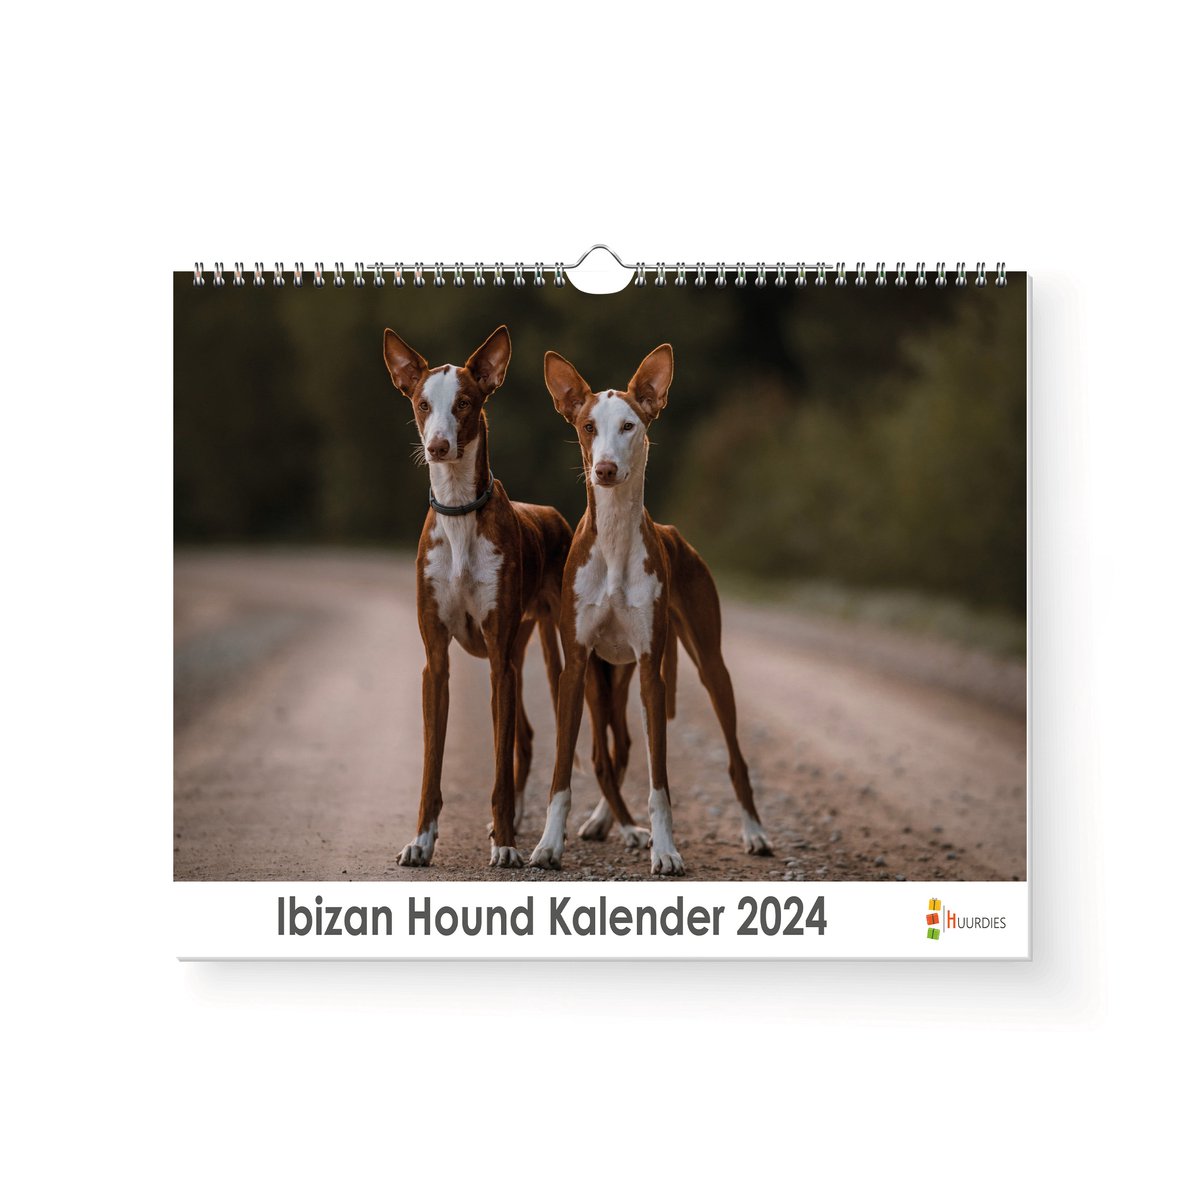 Kalender 2024 - Ibizan Hound - 35x24cm - 300gms - Spiraalgebonden - Inclusief ophanghaak